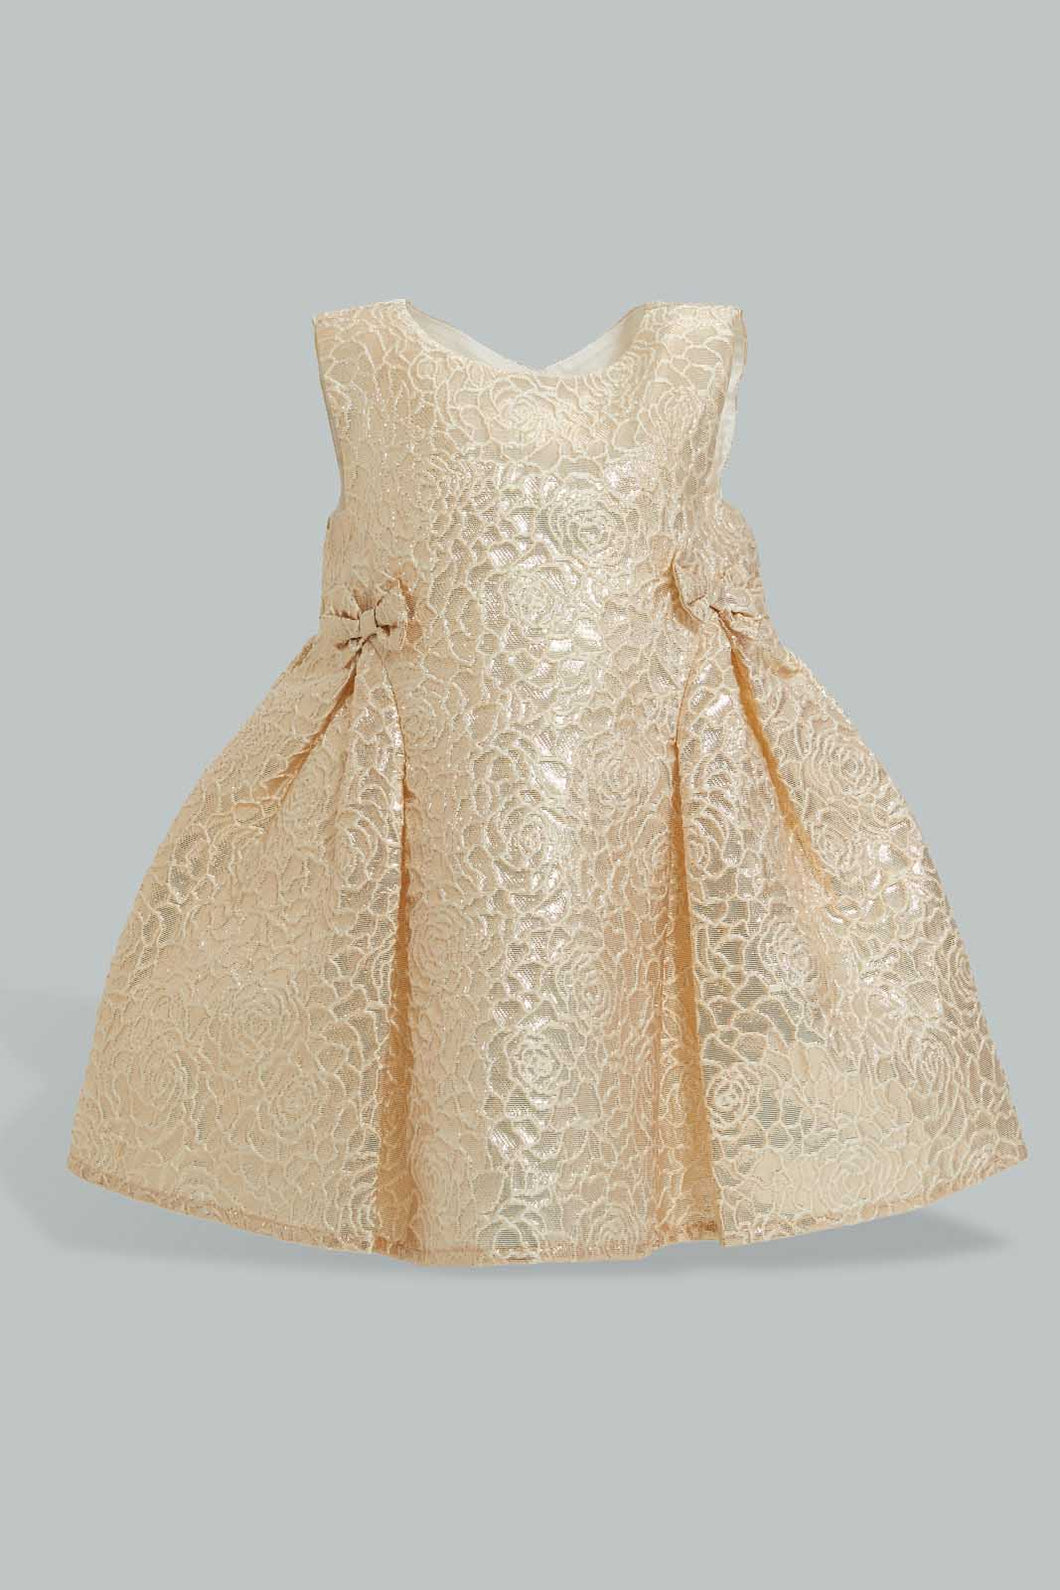 Gold Bow Dress For Baby Girls فستان باللون الذهبي بفيونكة للبنات الصغار